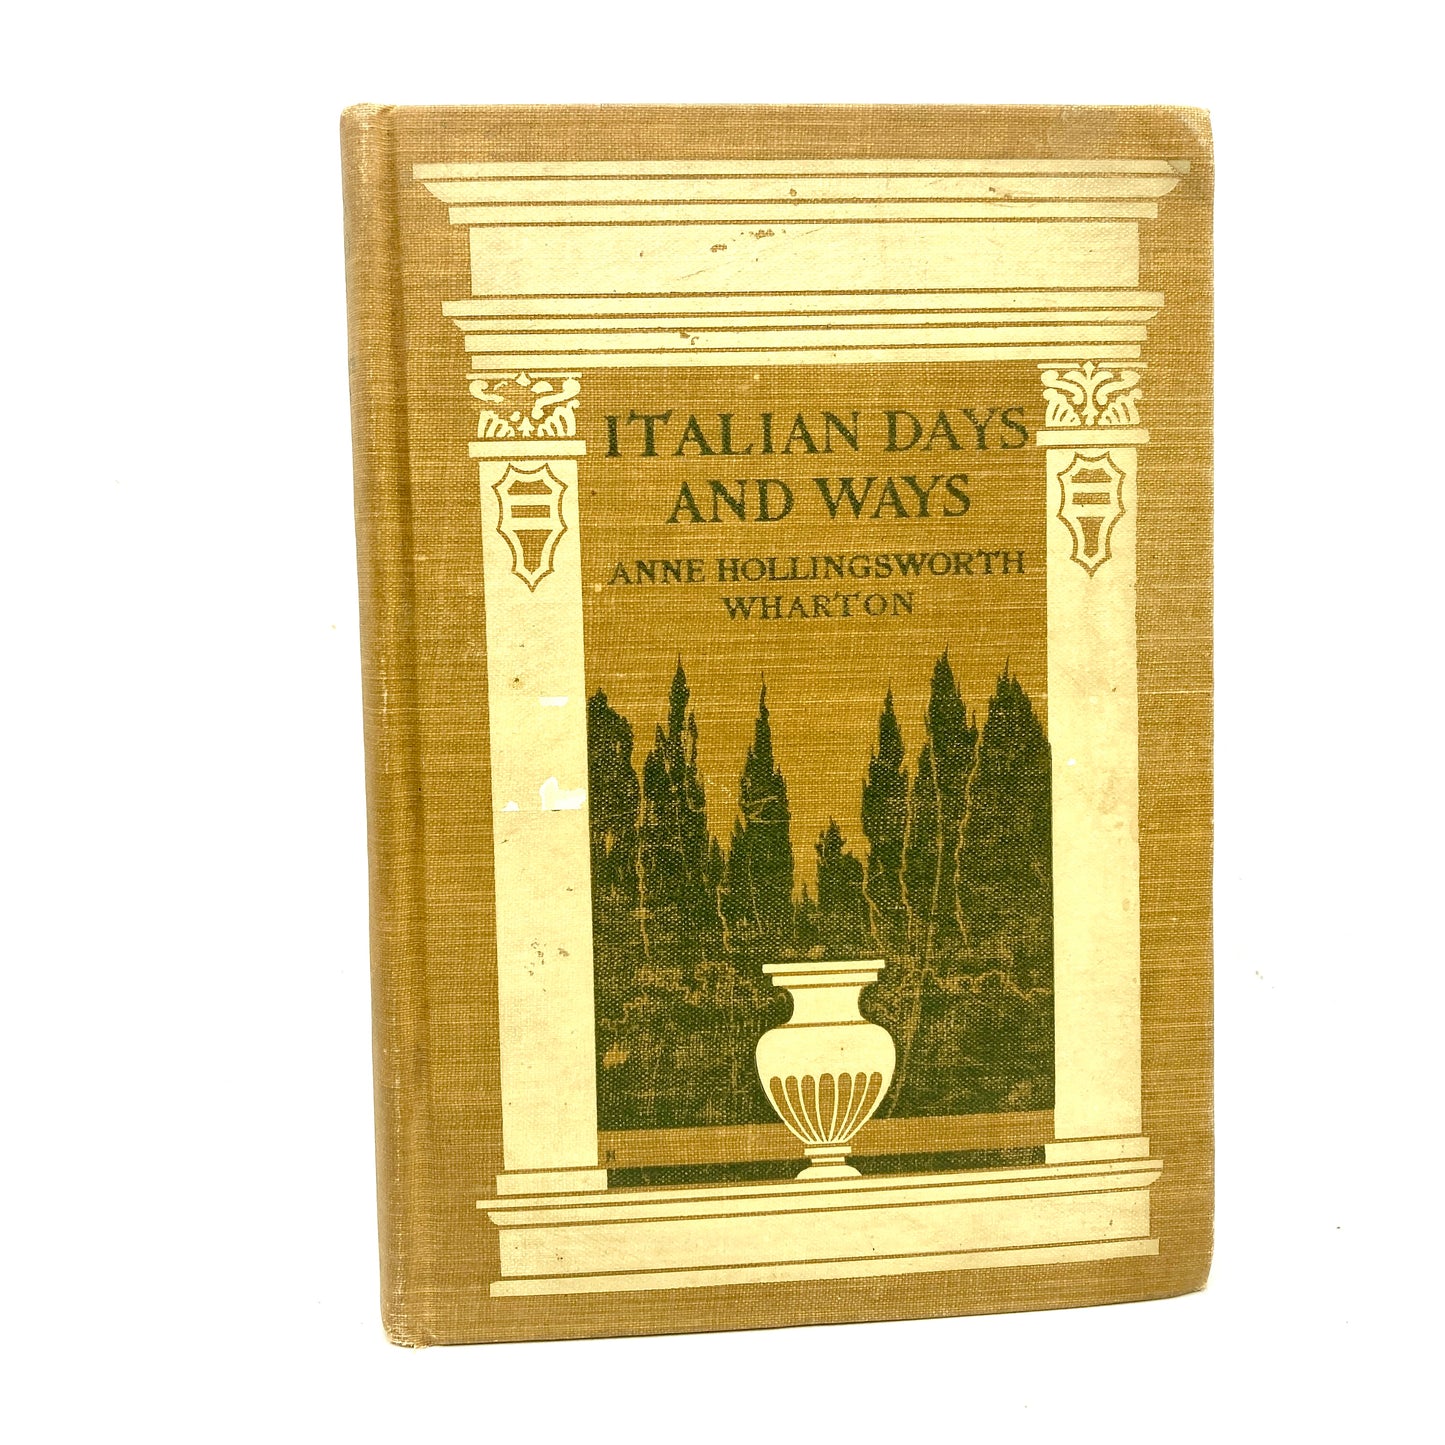 WHARTON, Anne Hollingsworth "Italian Days and Ways" [J.B. Lippincott, 1908]